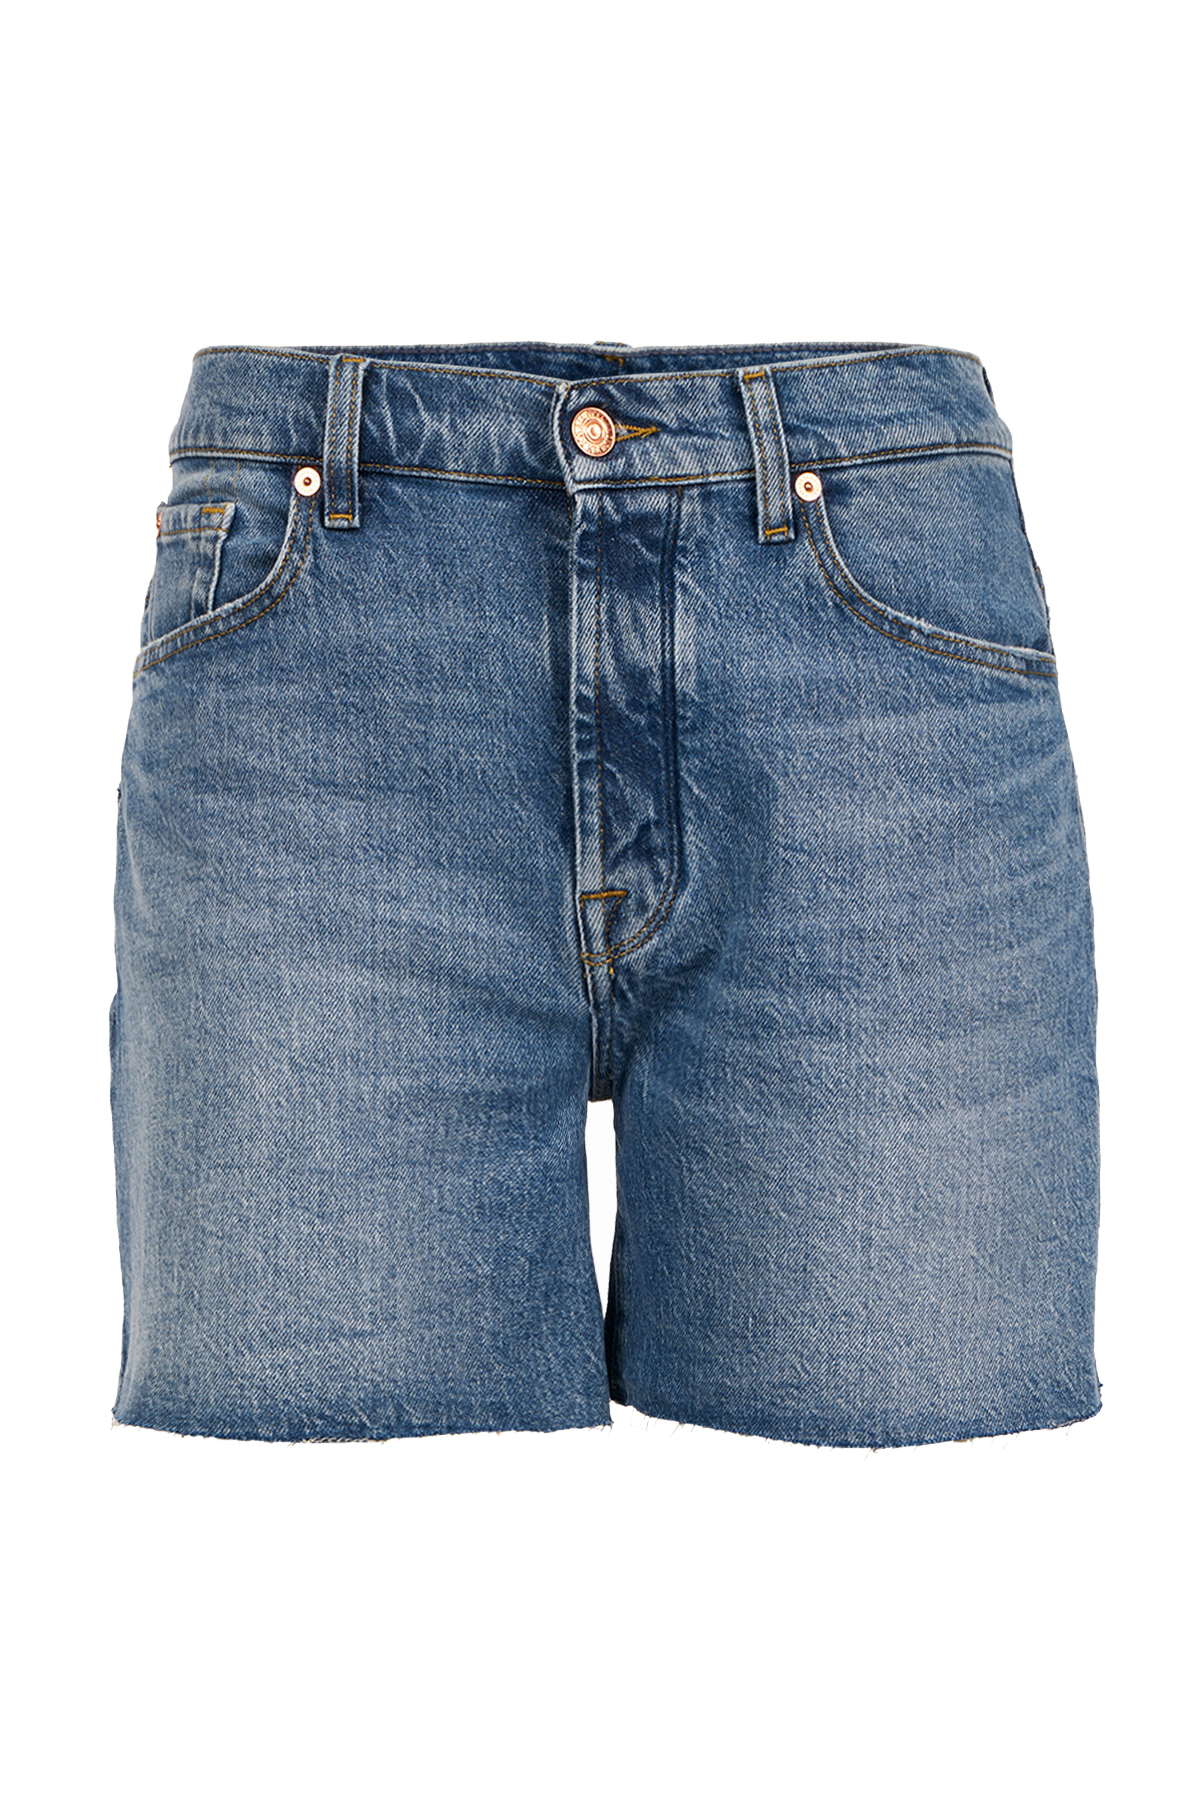 Jeans-Shorts Billie